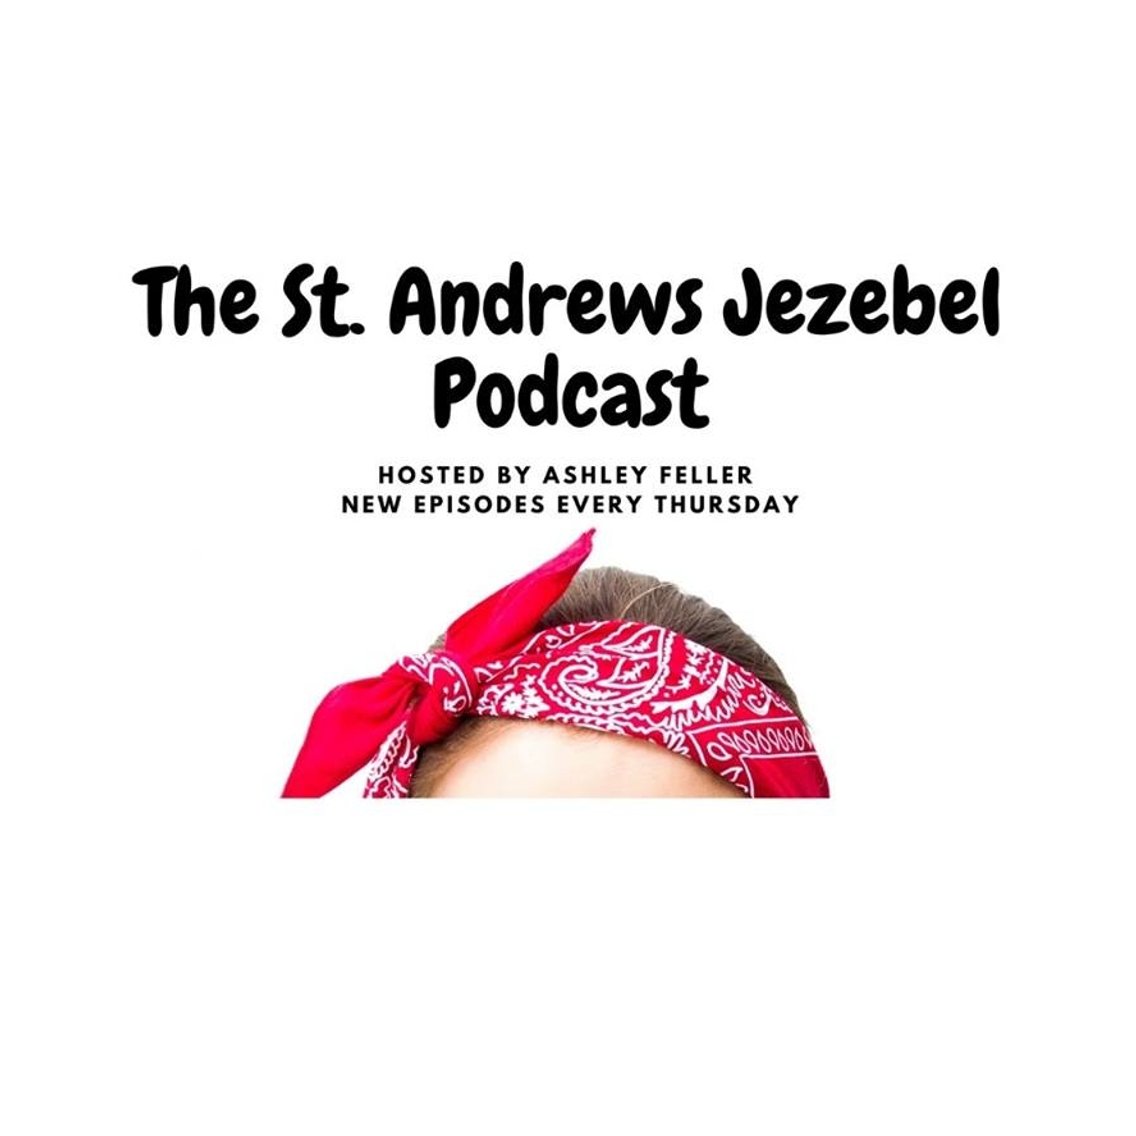 St. Andrews Jezebel Podcast - Cover Image